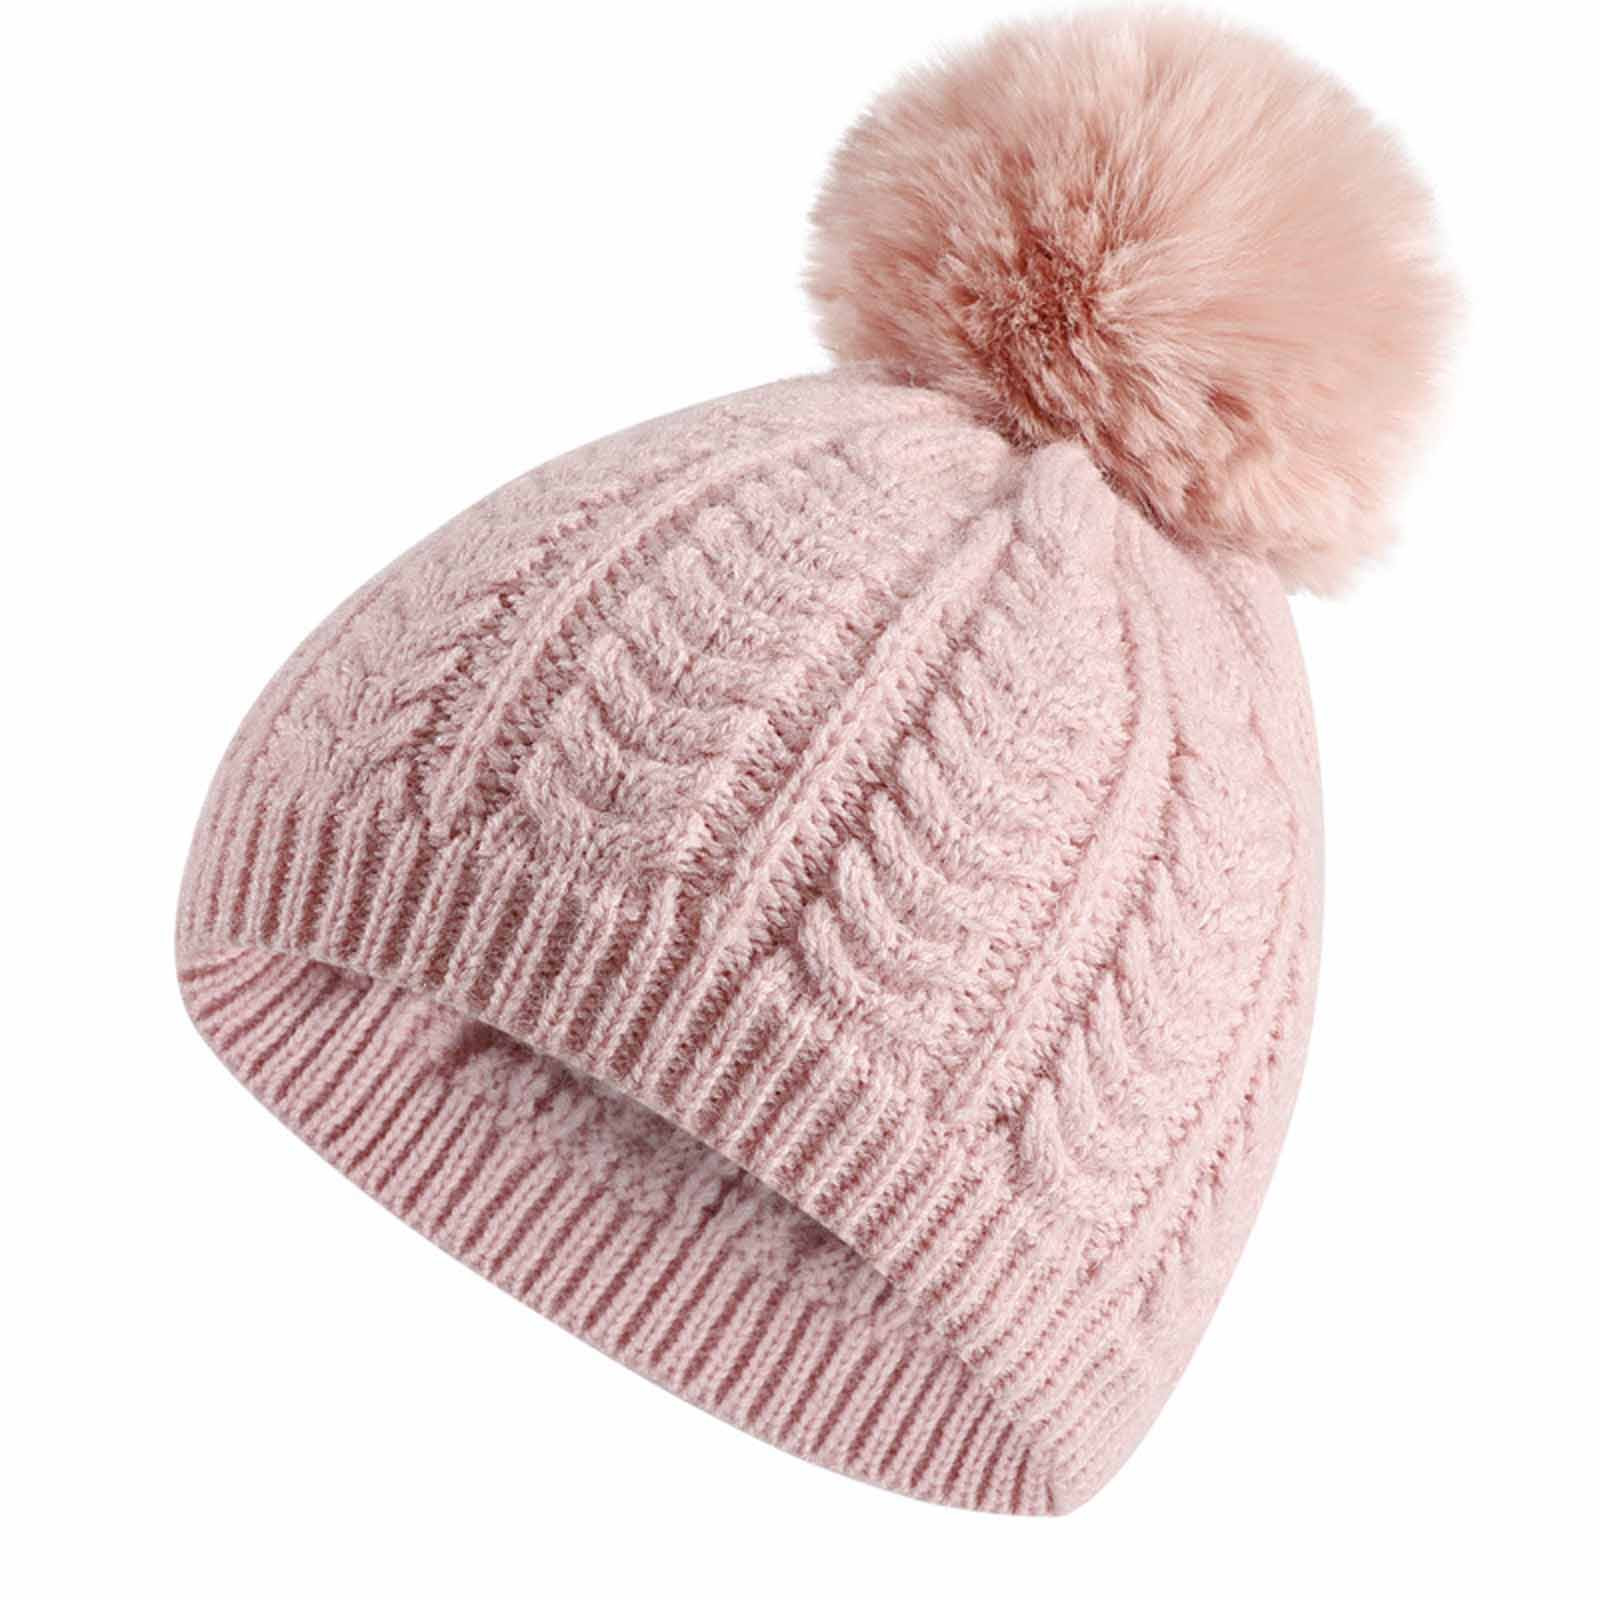 Lolmot Newborn Toddler Kids Winter Warm Fleece Beanie Hats Thick Warm Pompom Crochet Hairball Knit Cap - image 1 of 3